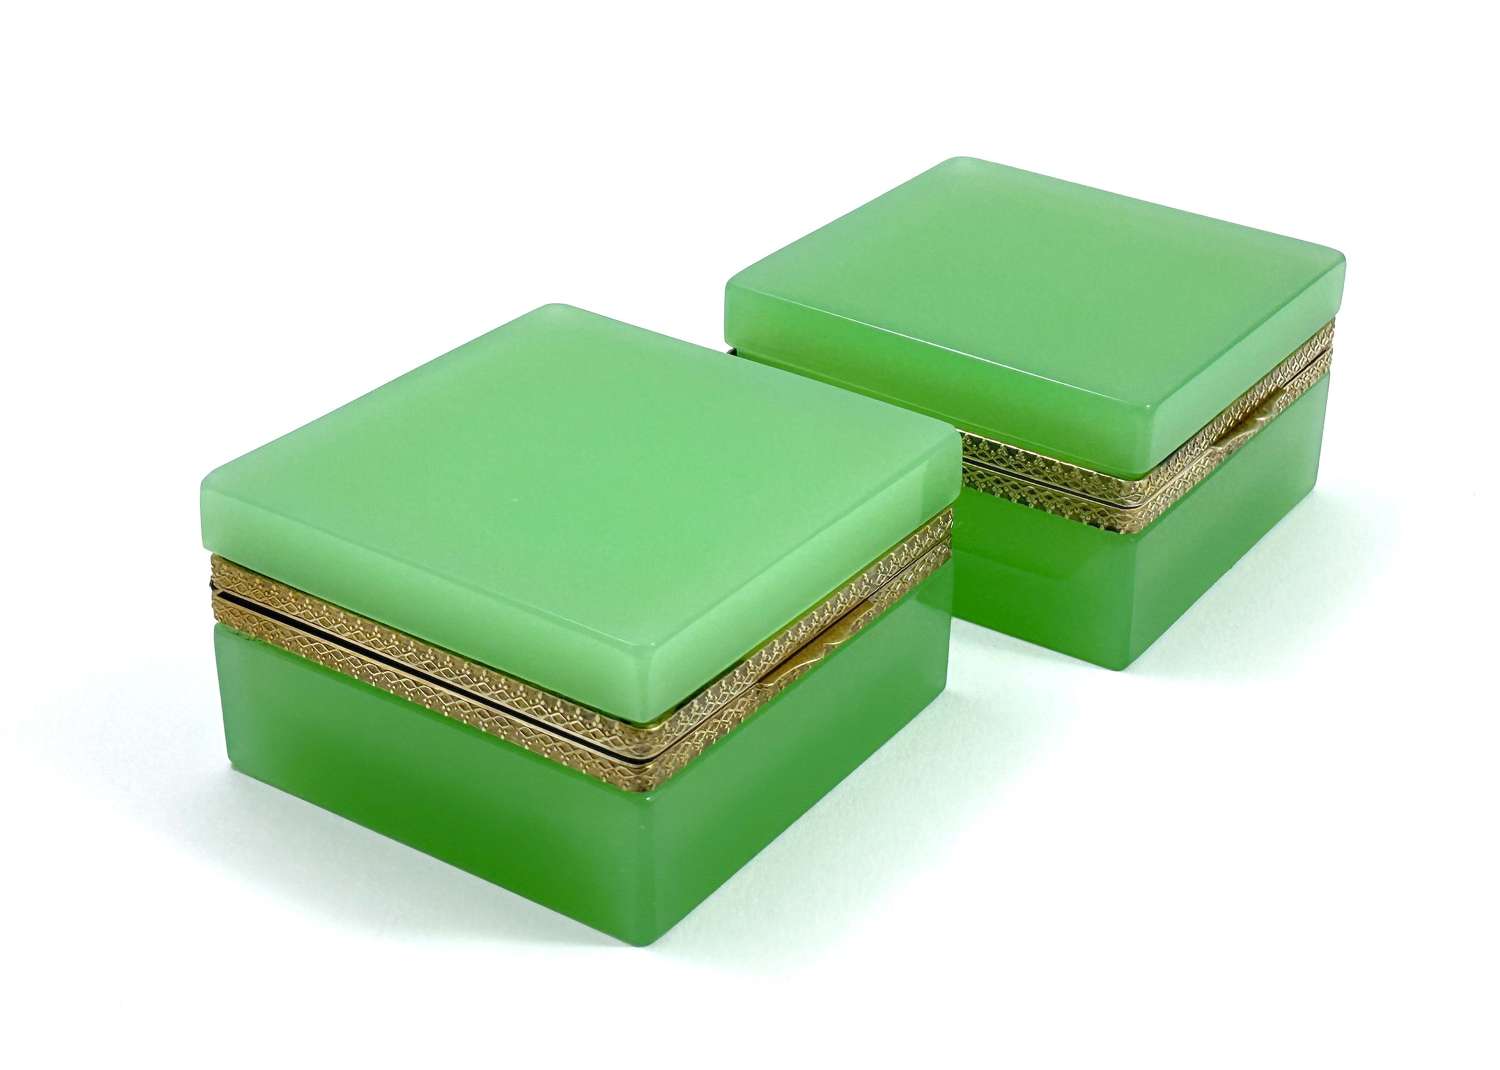 Pair of Antique Green Opaline Glass Casket Boxes